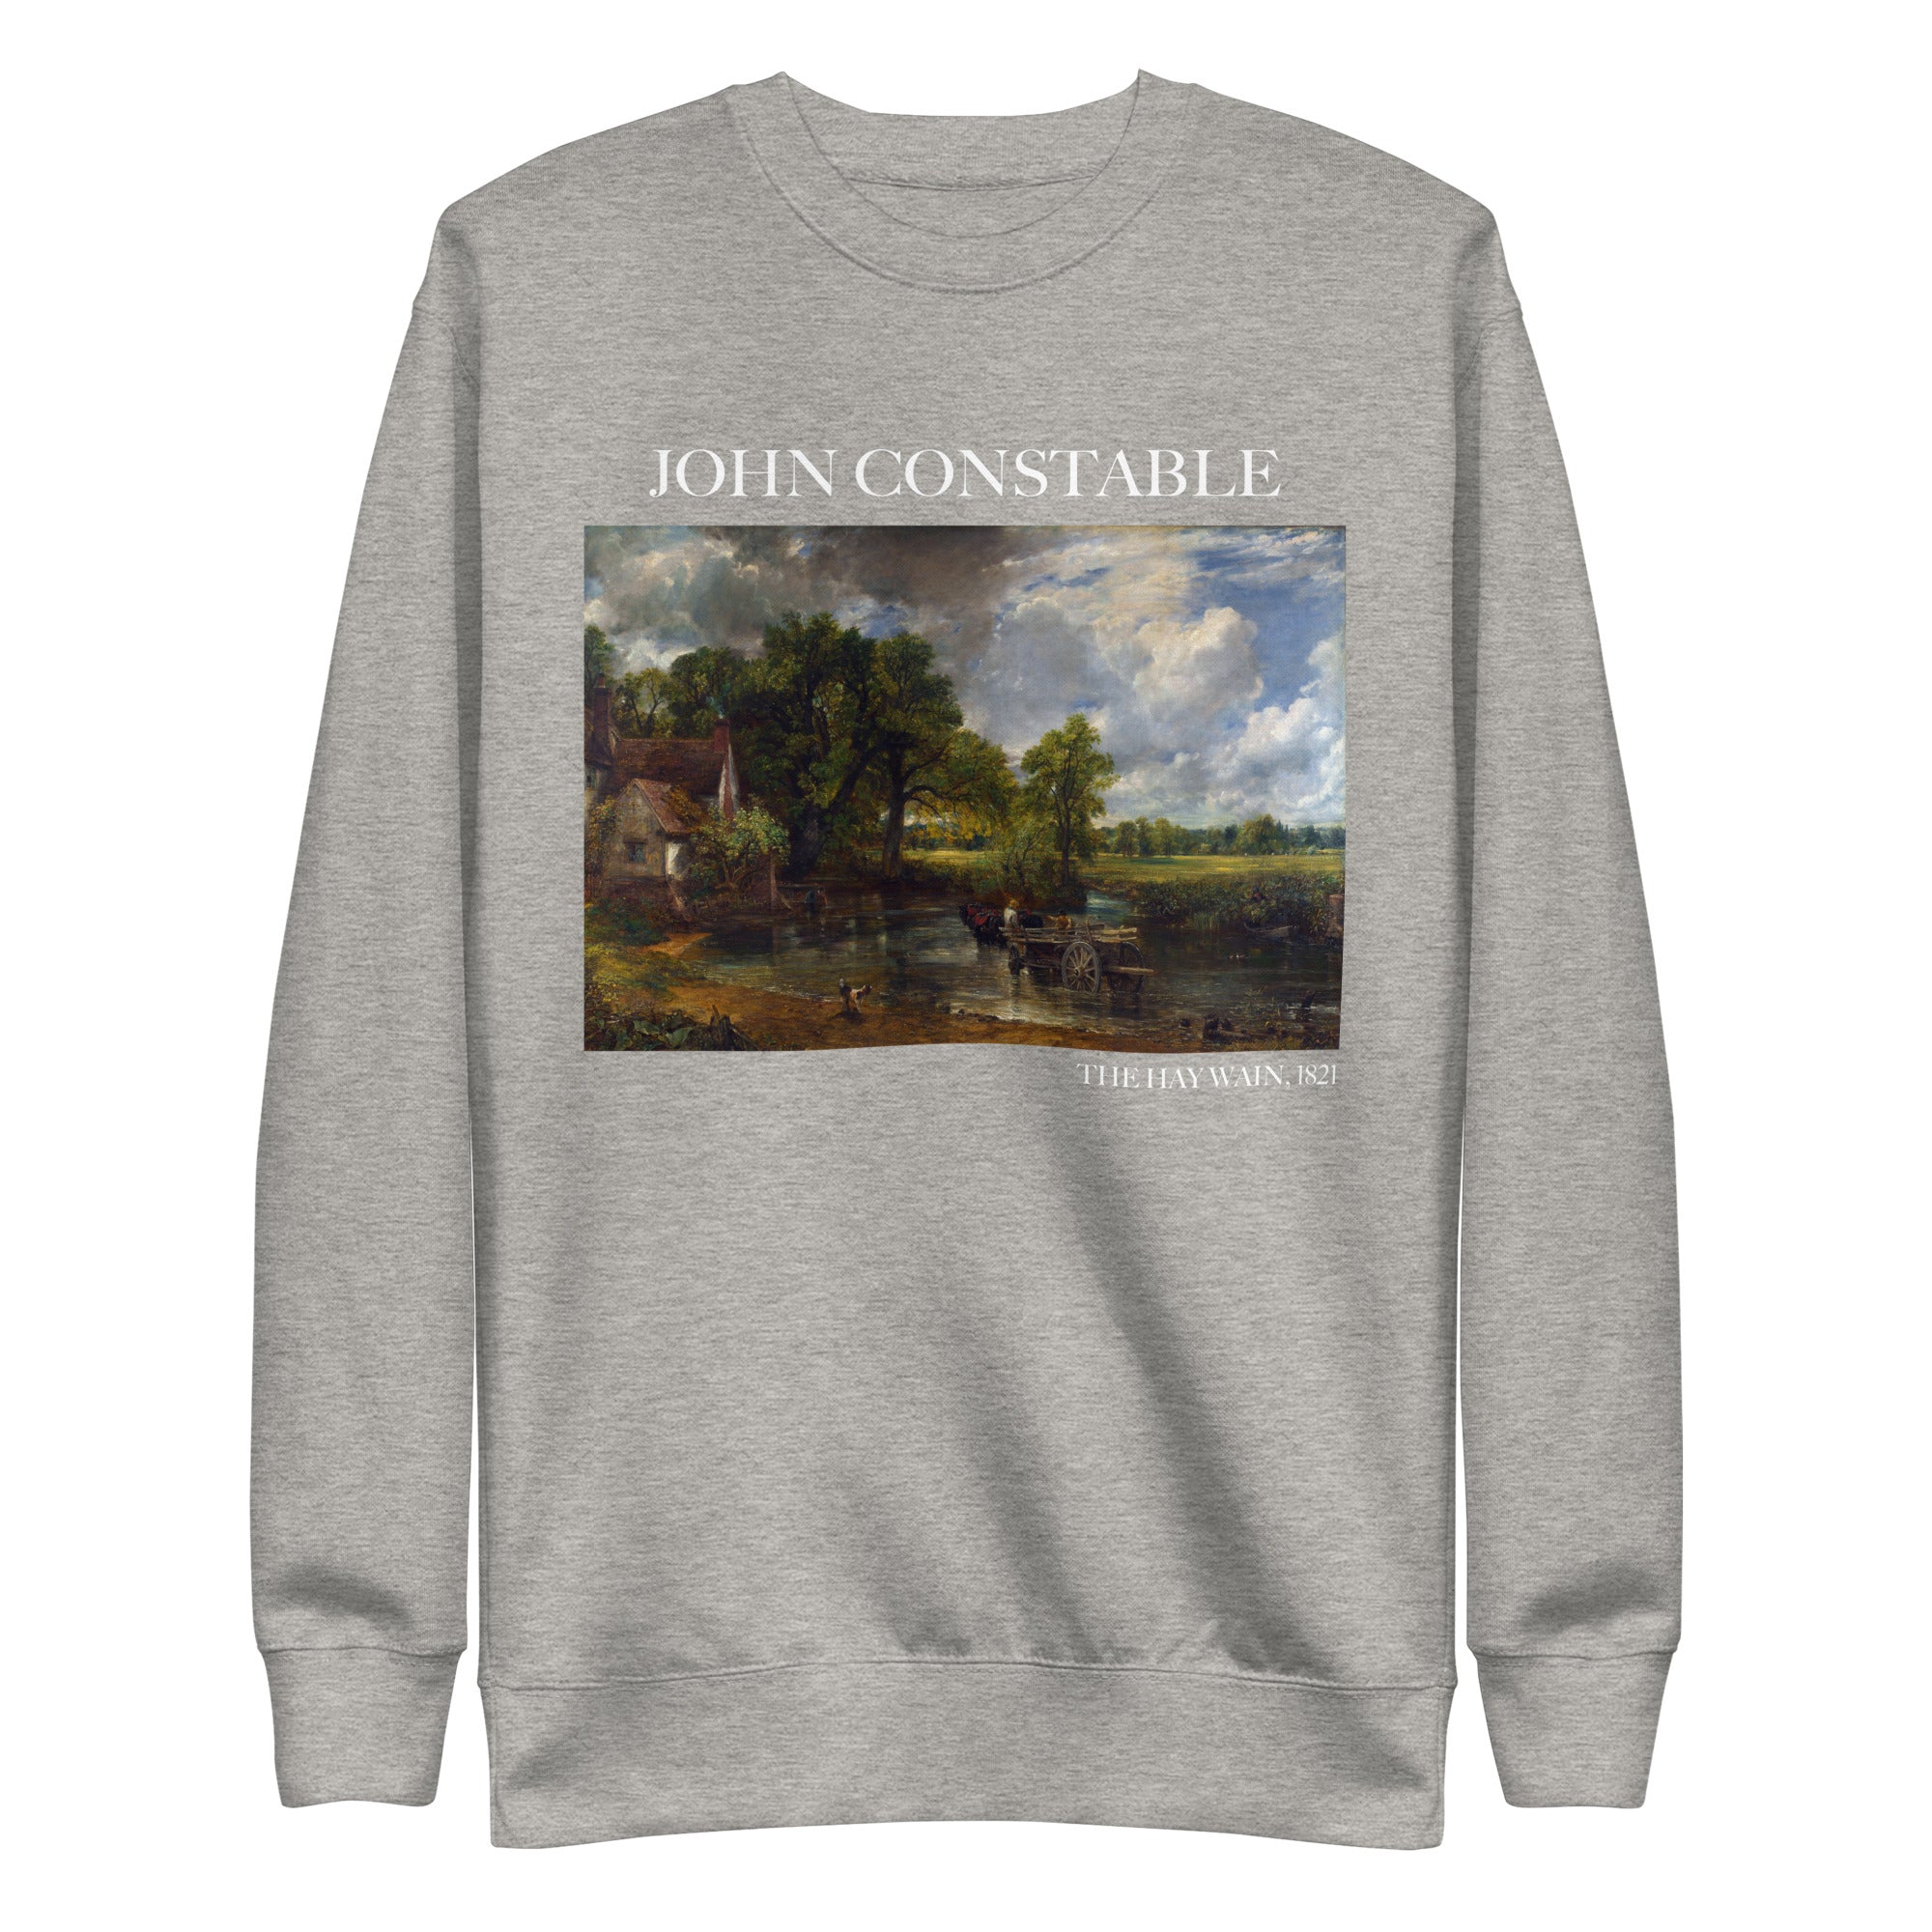 John Constable 'The Hay Wain' Famous Painting Sweatshirt | Unisex Premium Sweatshirt